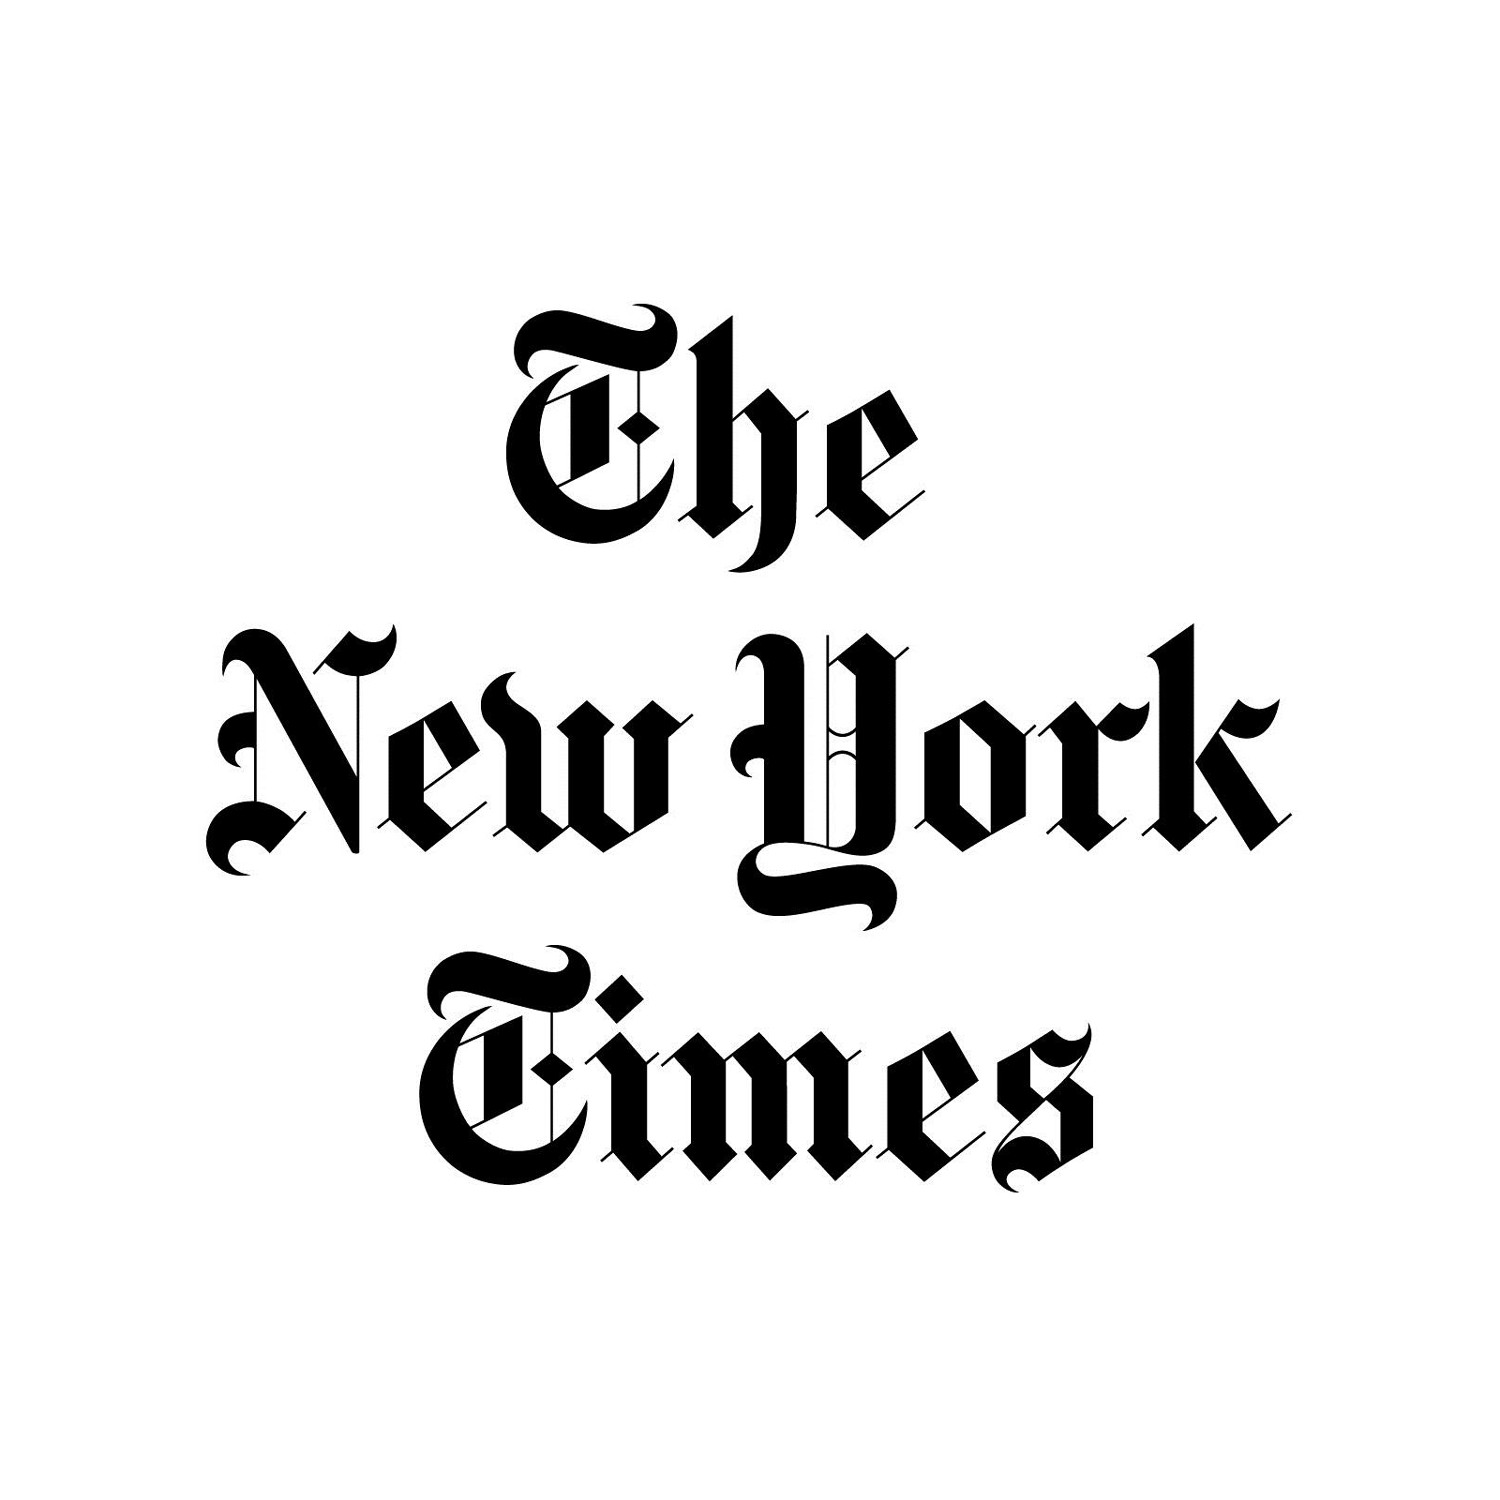 New York Times Logo Png New York Times Logopng New York Times Logo Png 1500 1500 Tyler 1500x1500 